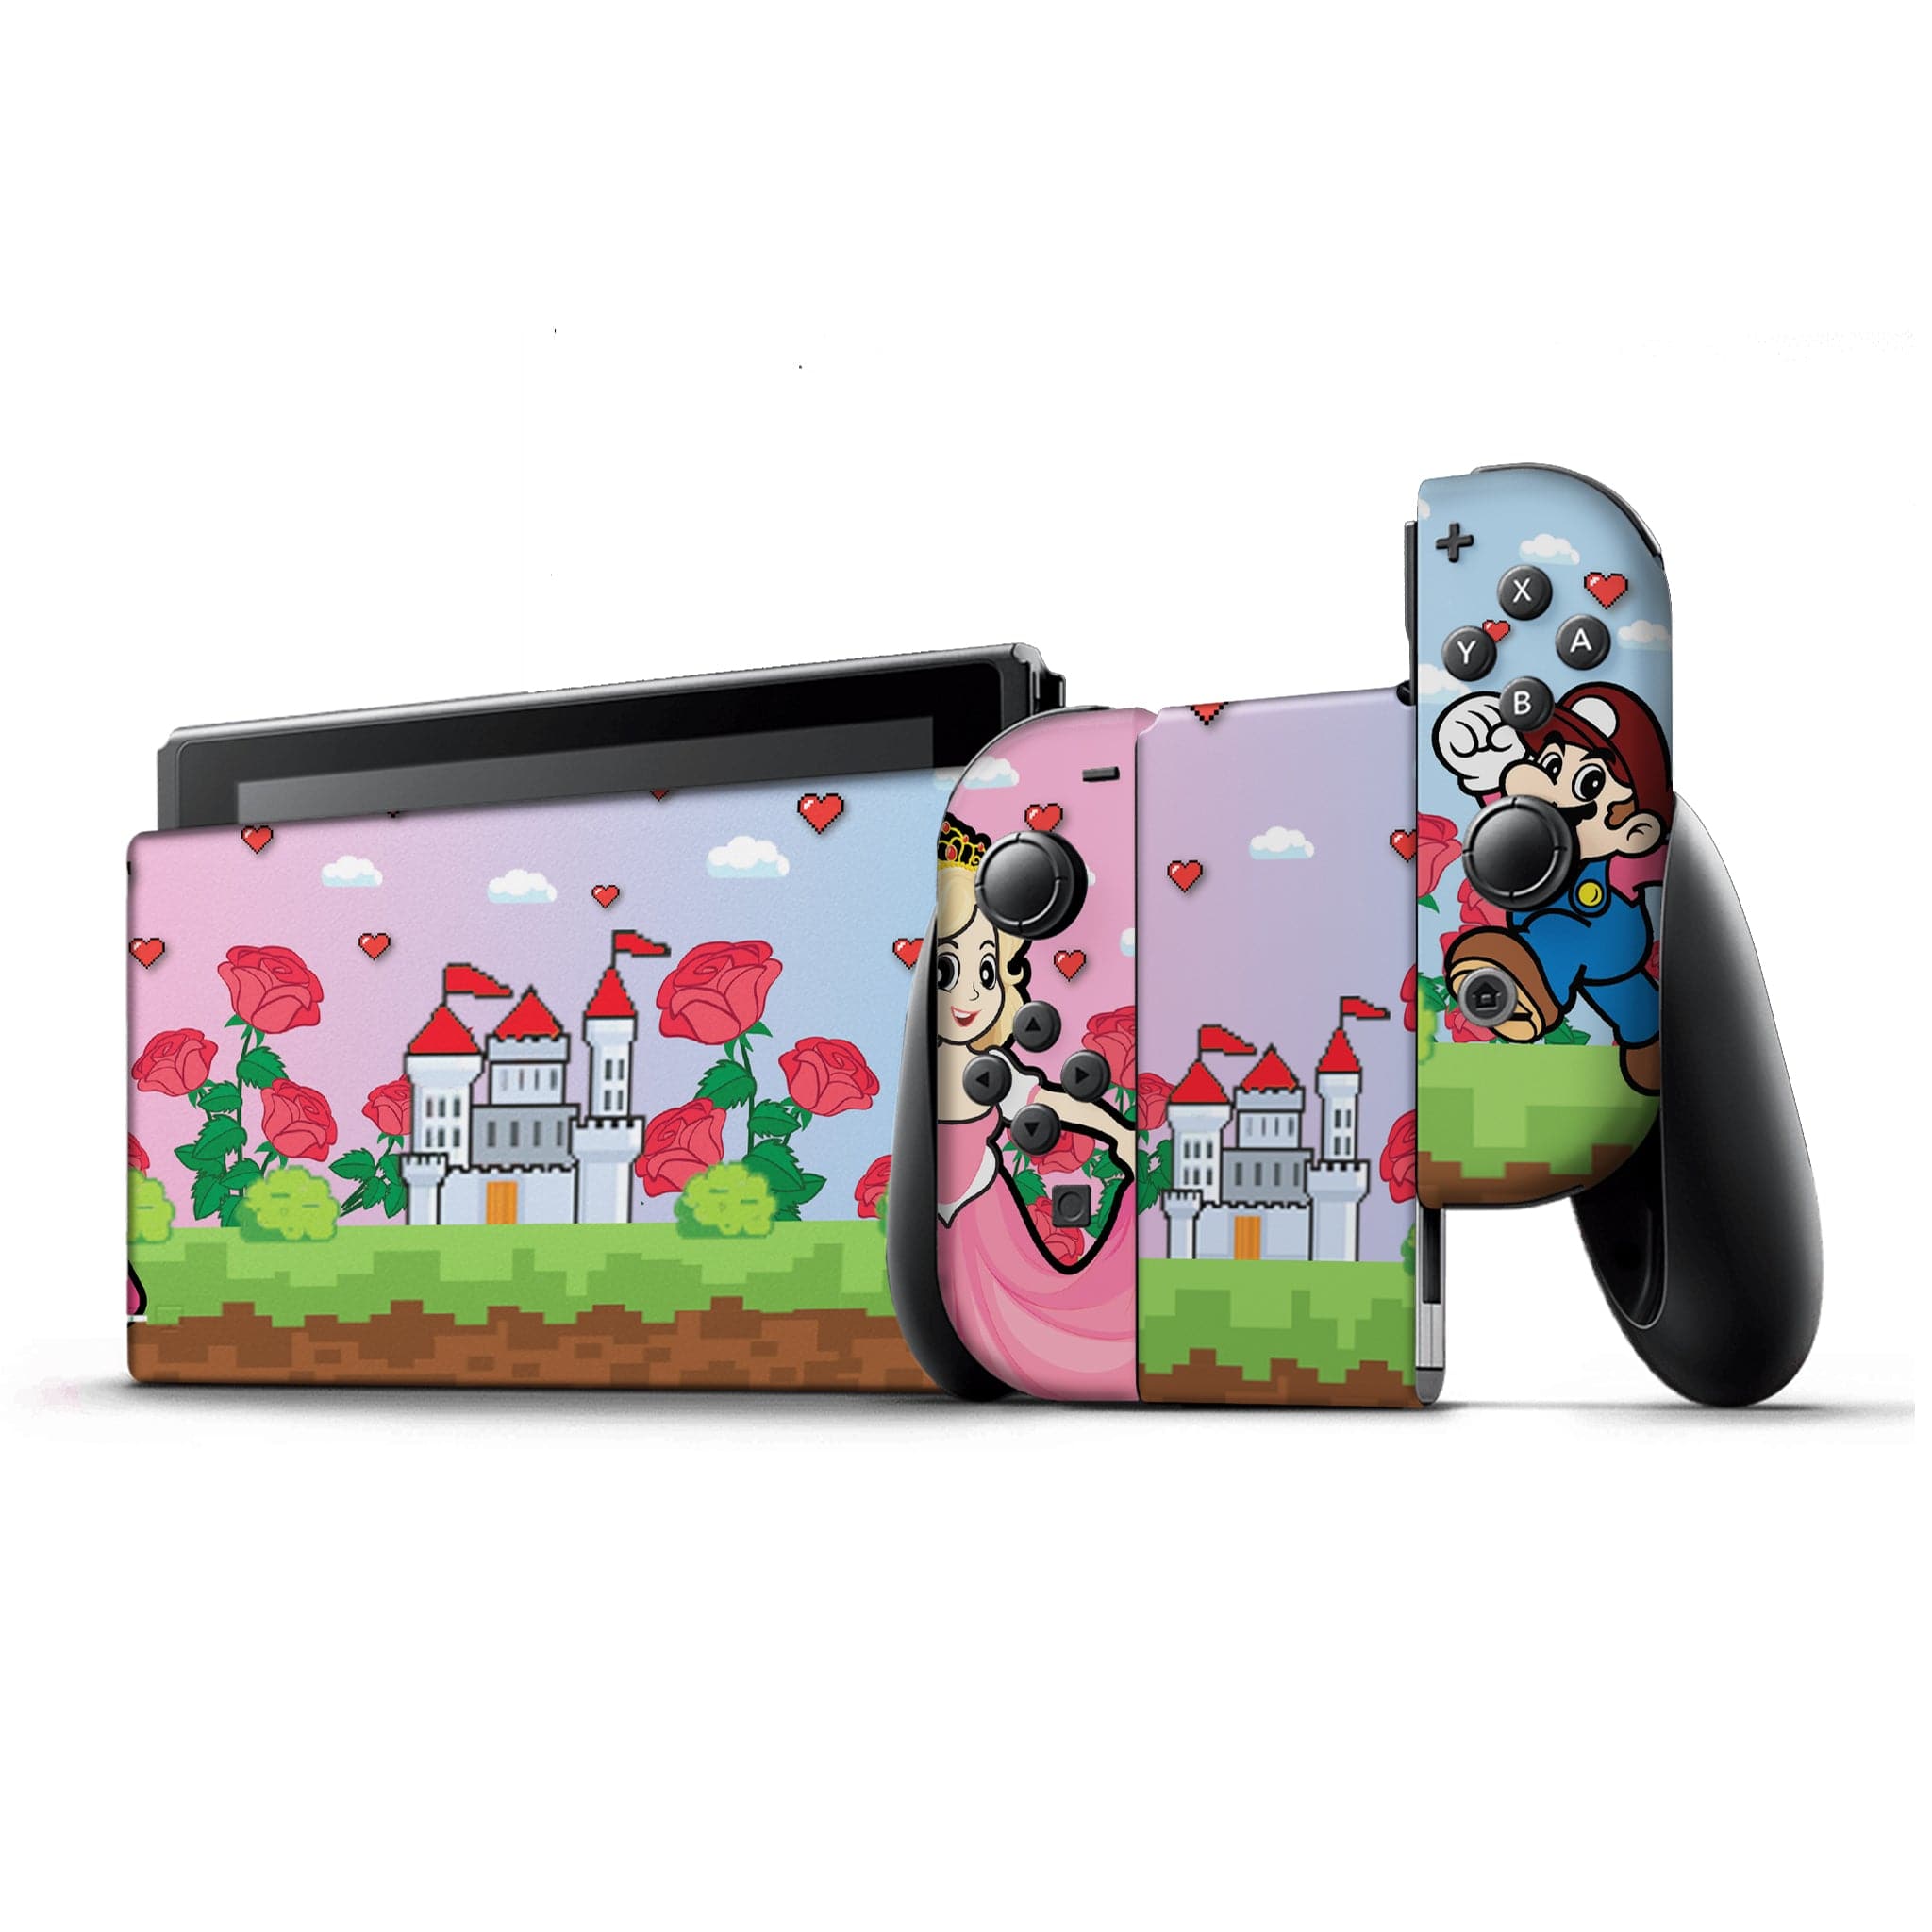 Mario & The Princess Switch Full Set | Nintendo Switch Price